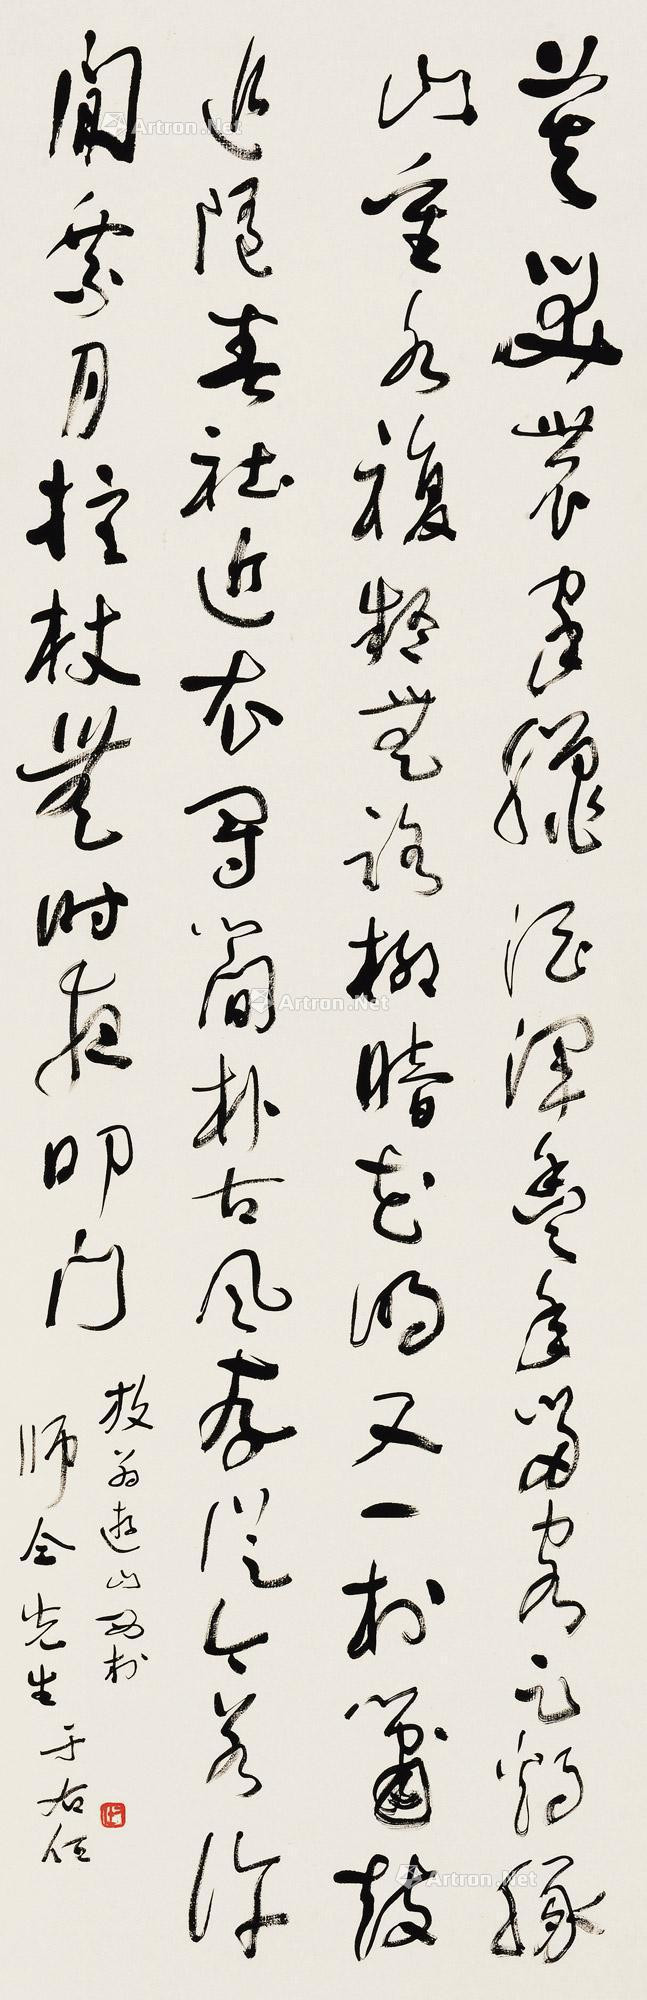 Calligraphy  in Cursive  Script